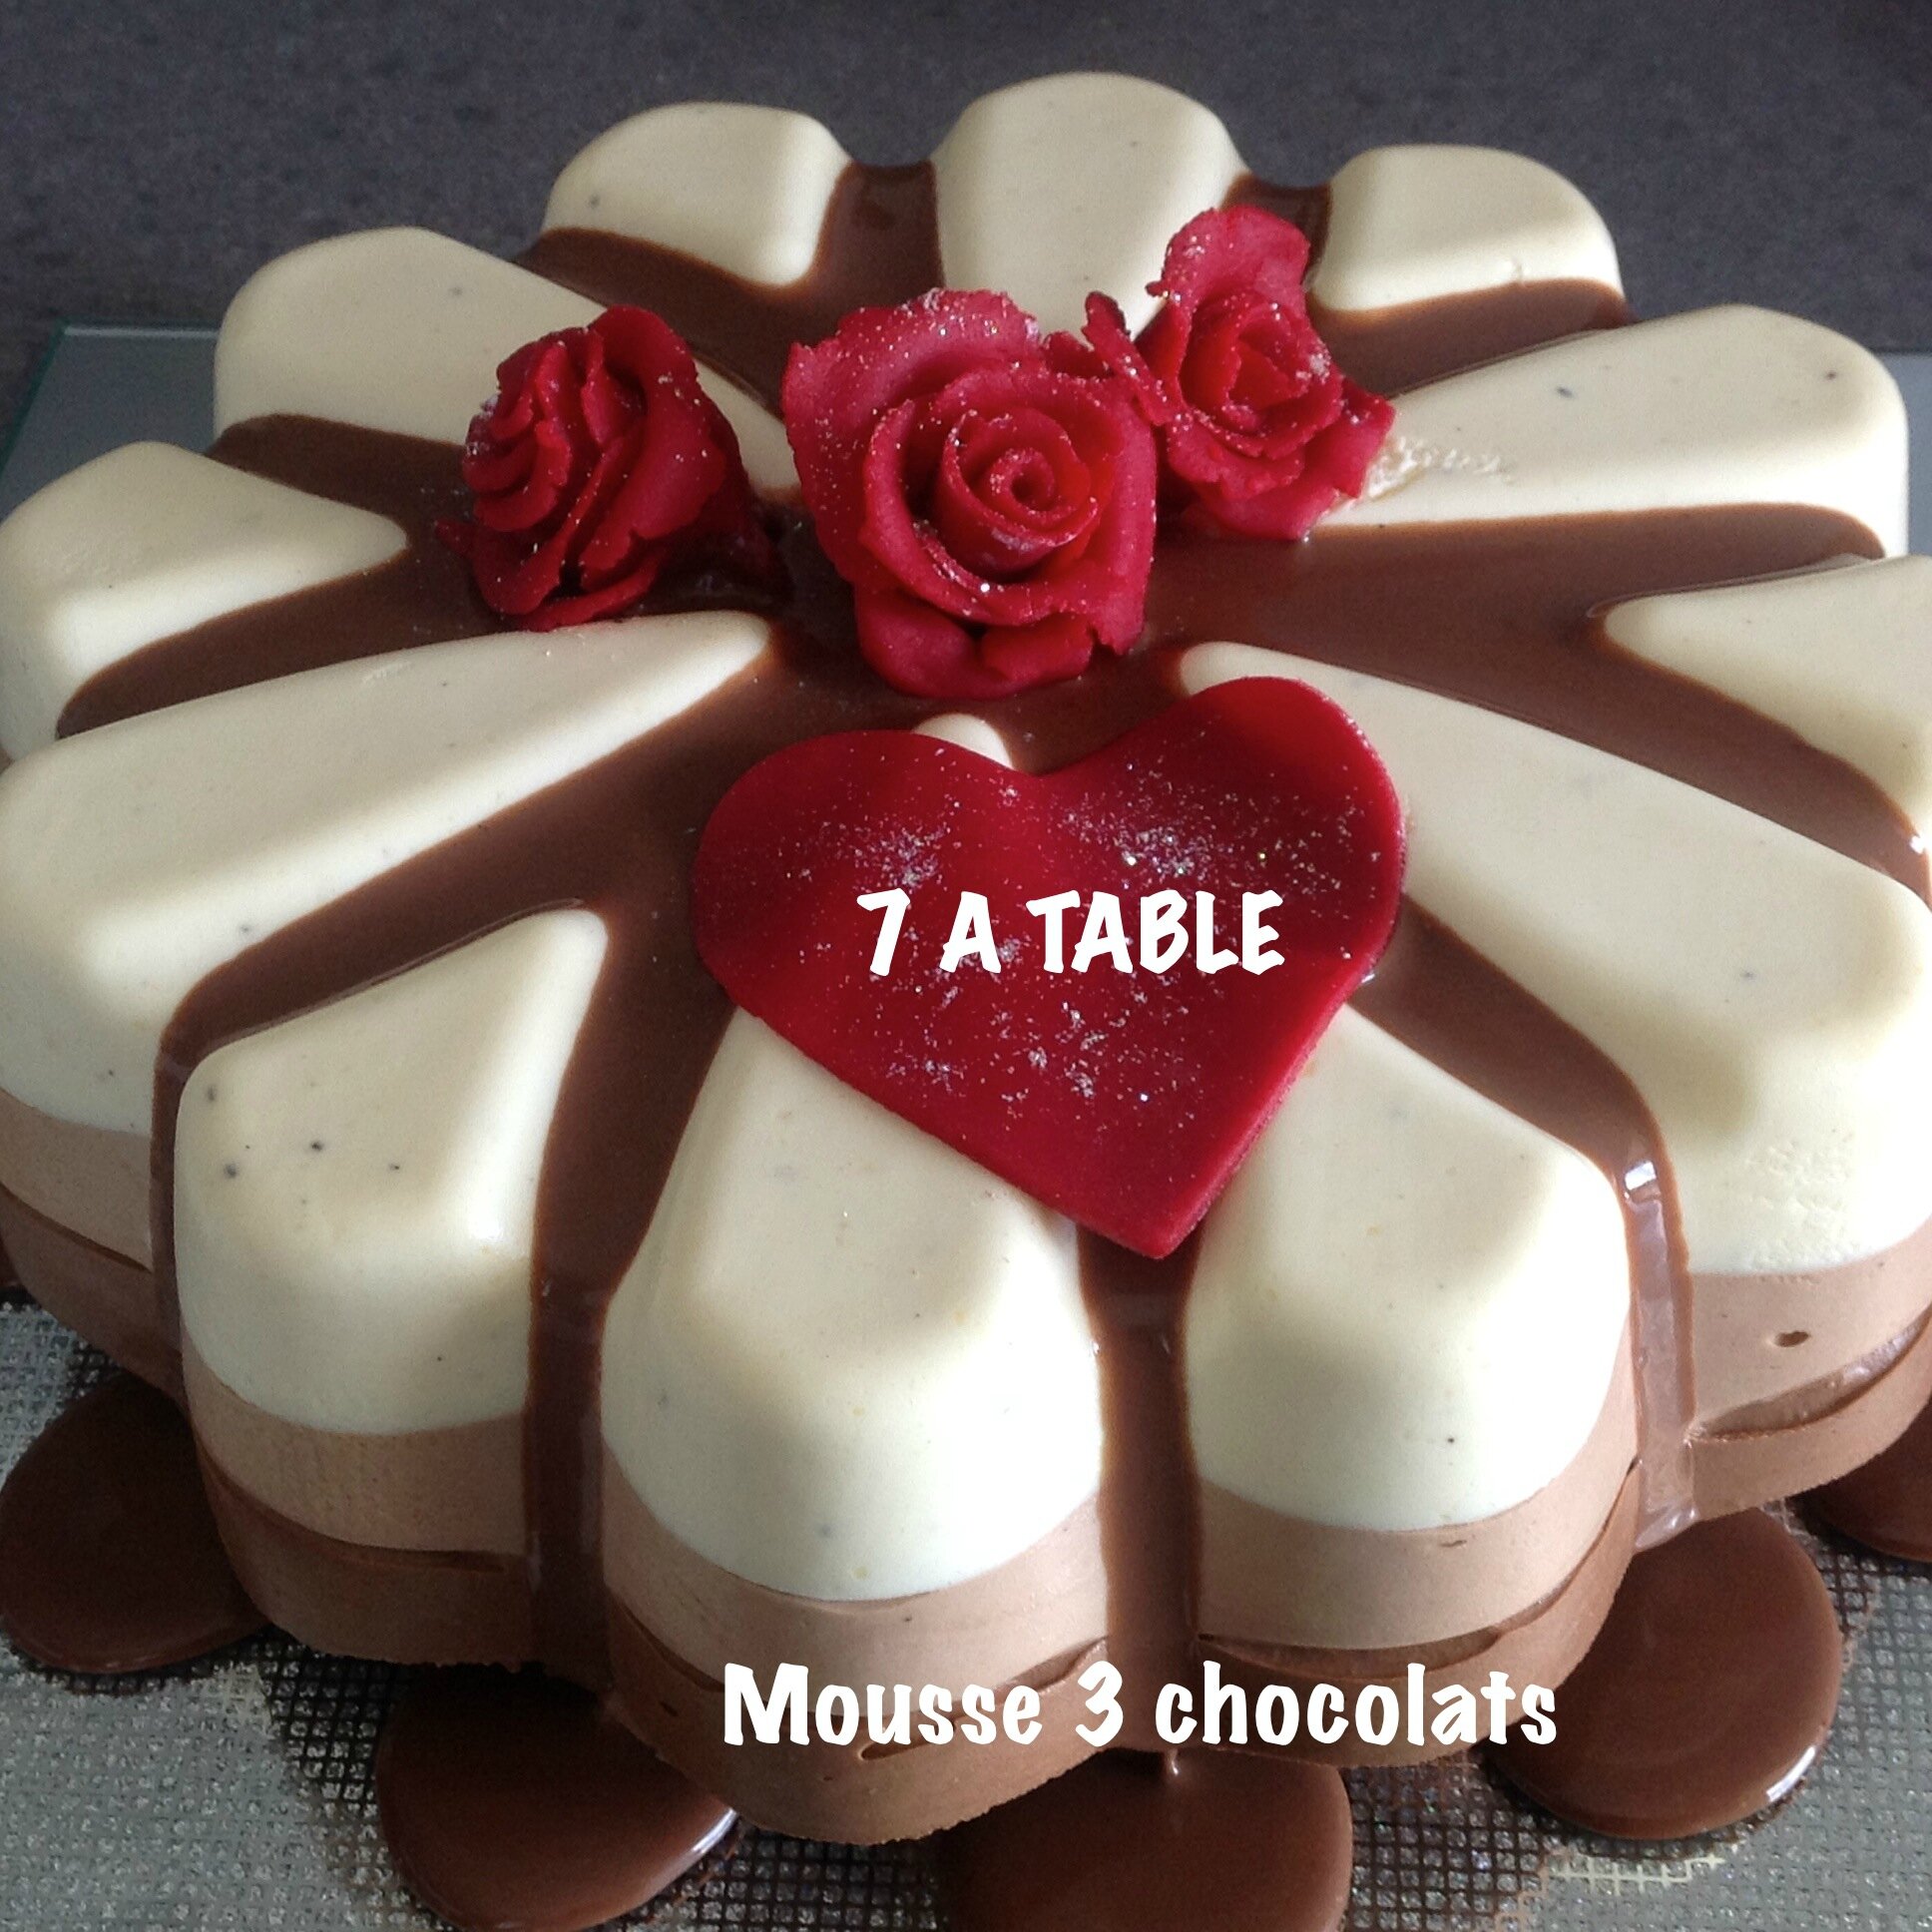 Le 3 Chocolats 7 A Table